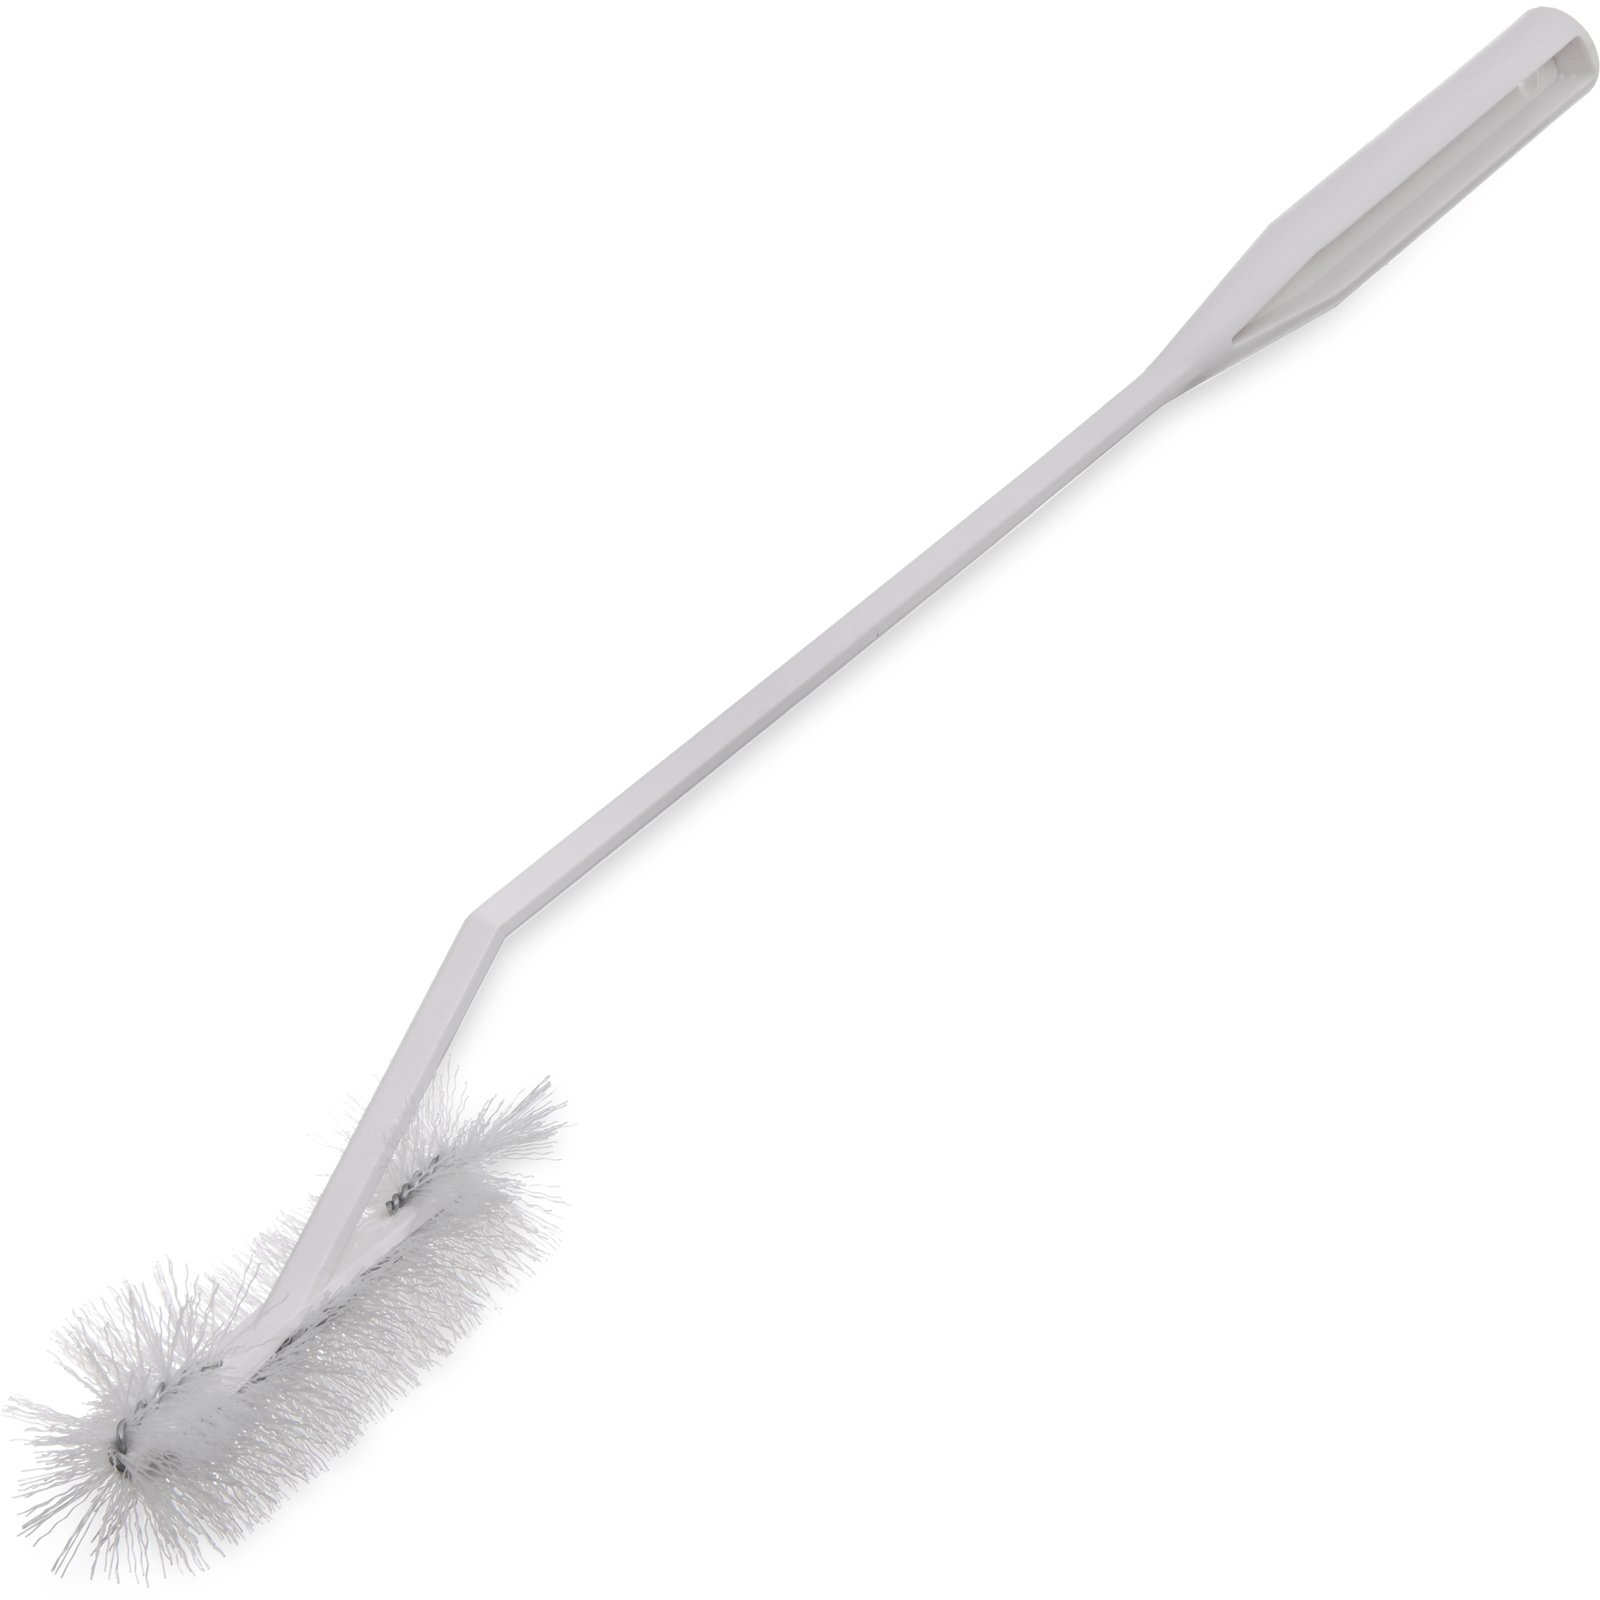 4041300 - Handle Dish Brush w/2-3/4 Polyester Bristles 12